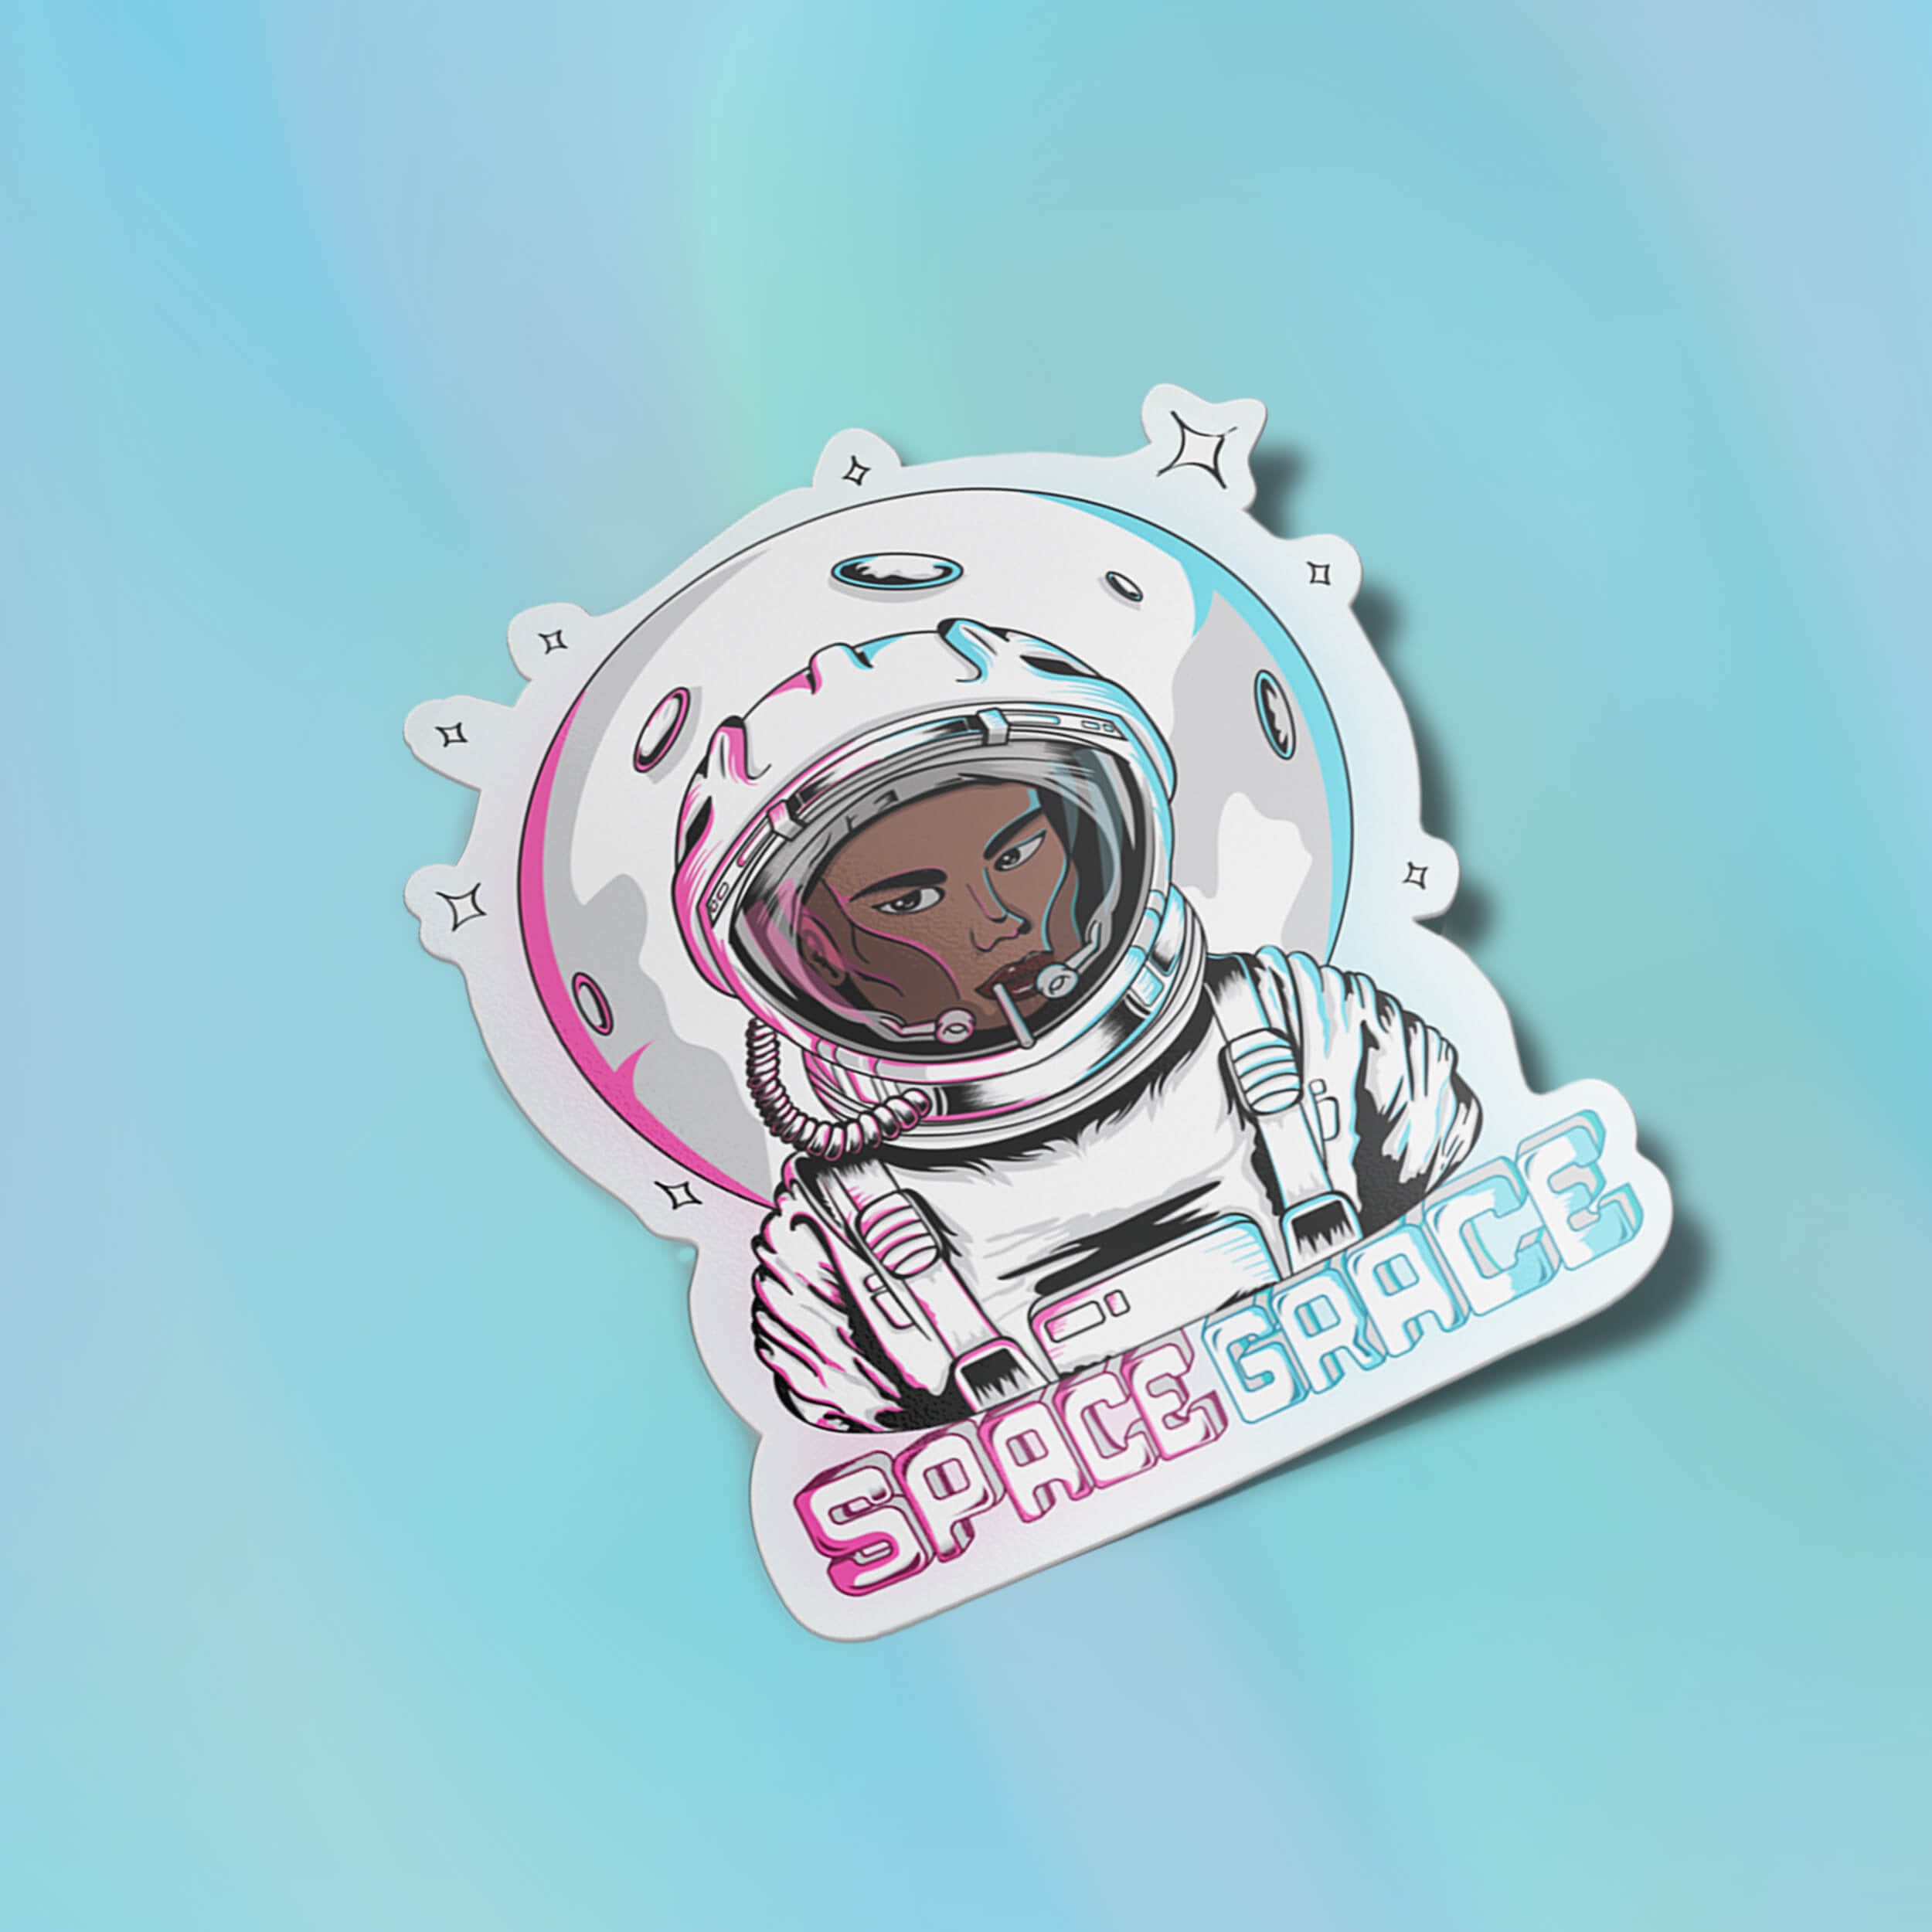 Space Grace Premium Vinyl Sticker,  Grace Jones Astronaut Laptop Decal, 1980s Style Sticker, Space Galaxy